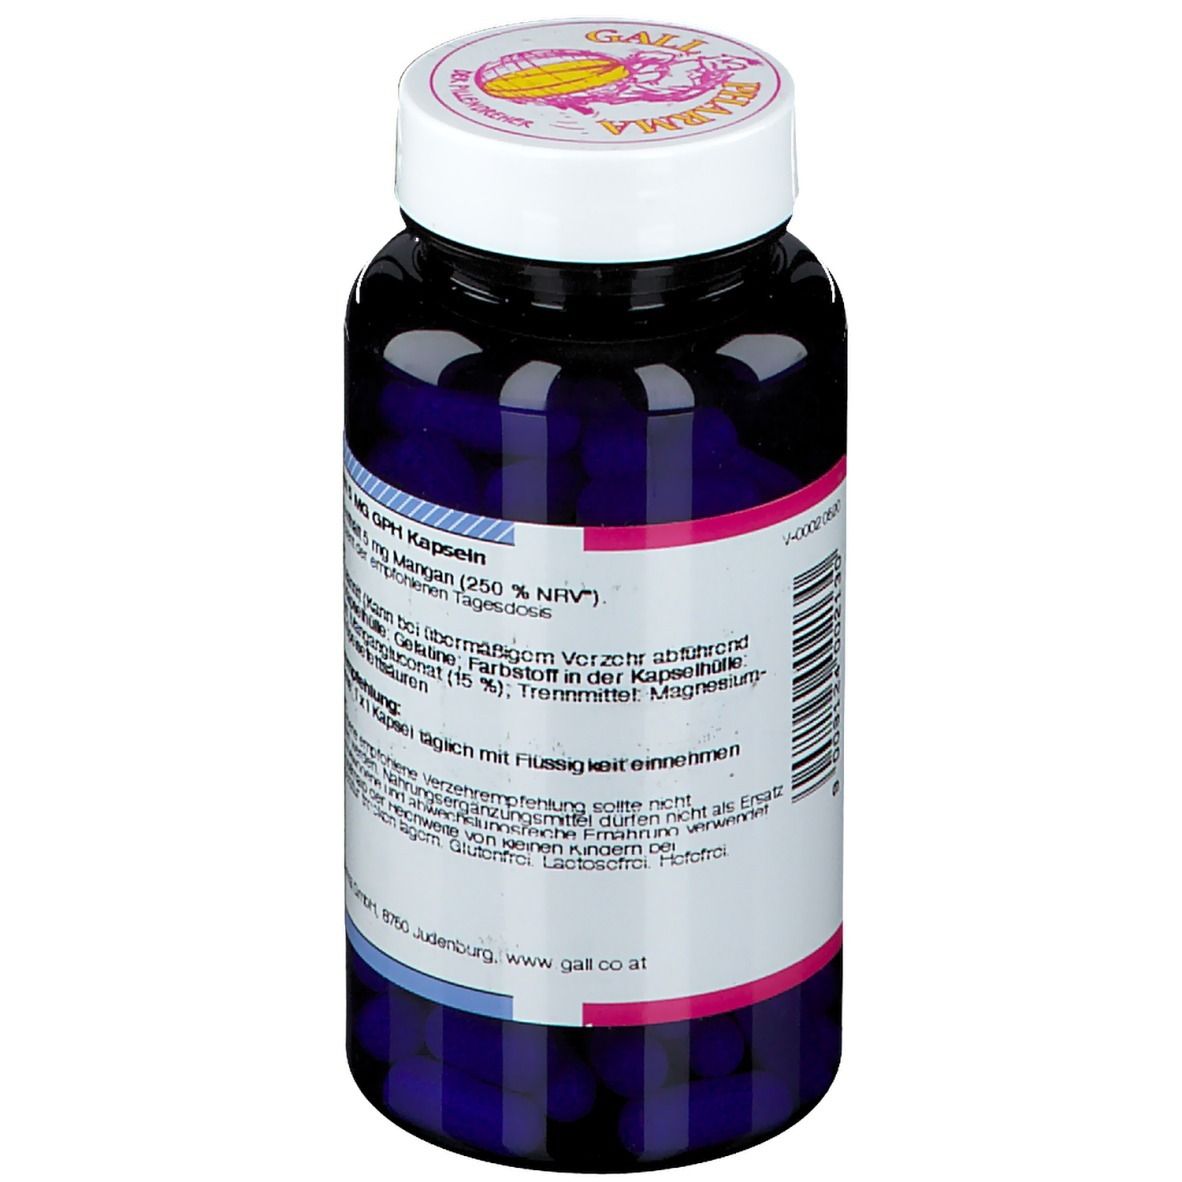 GALL PHARMA Mangan 5 mg